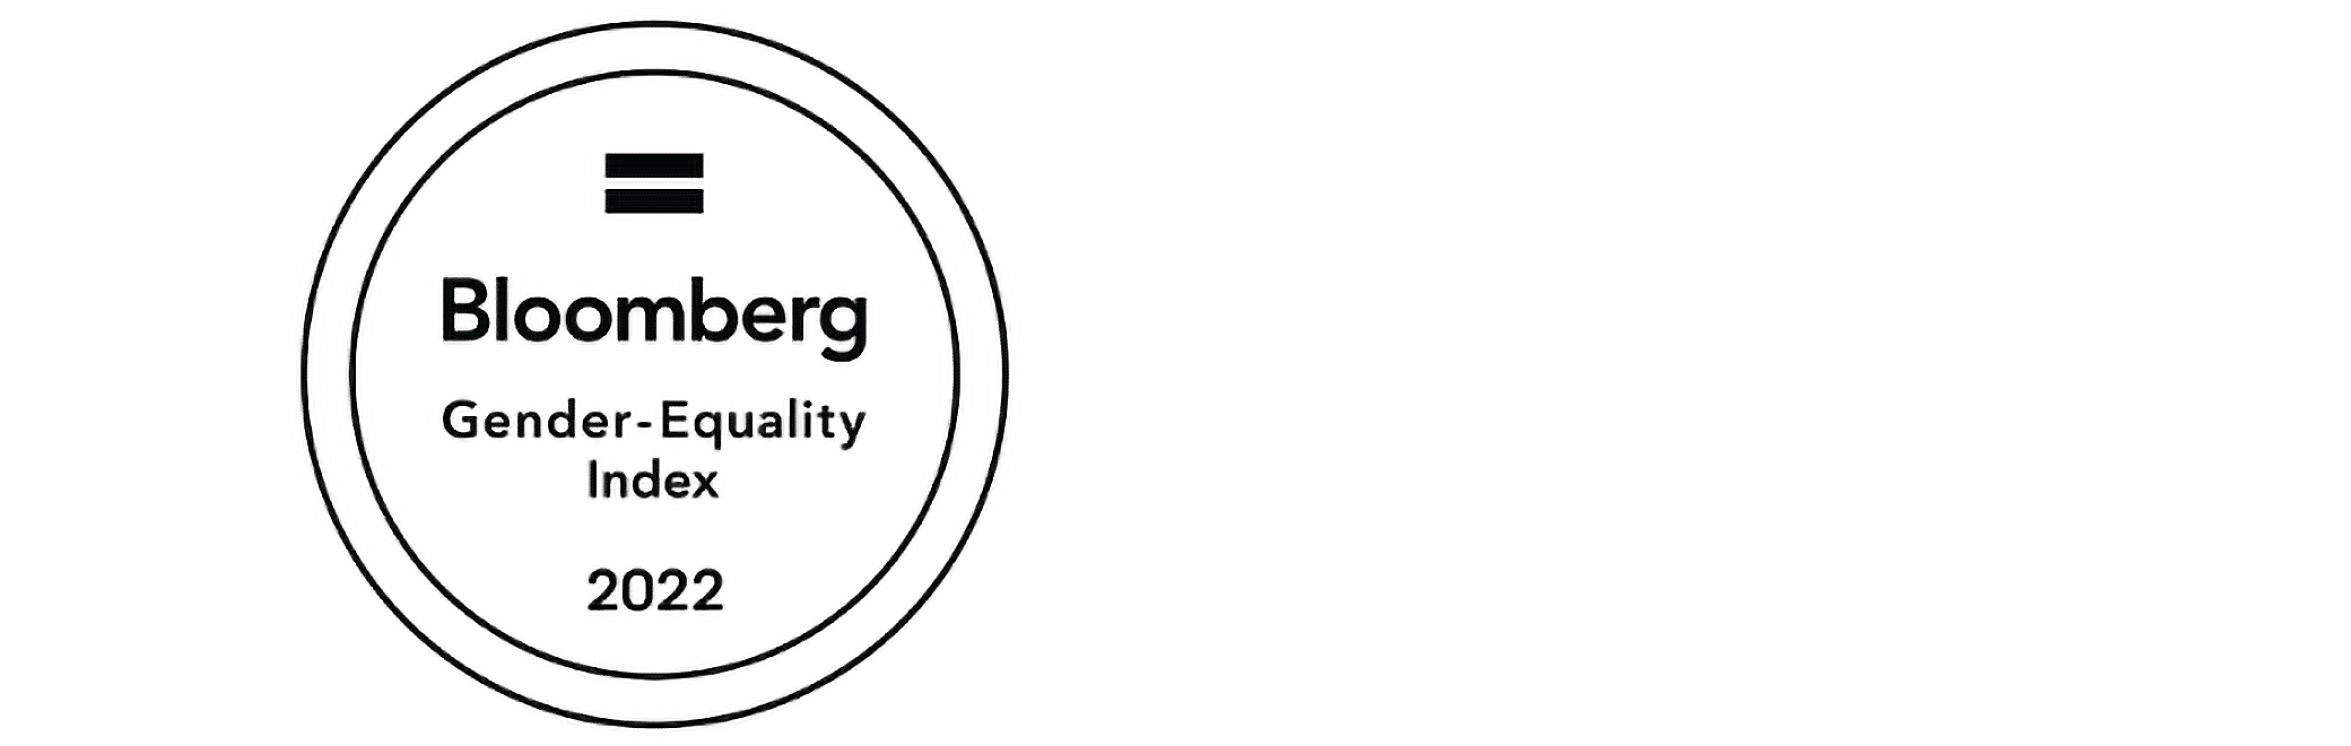 The Bloomberg Gender-Equality Index 2022 logo